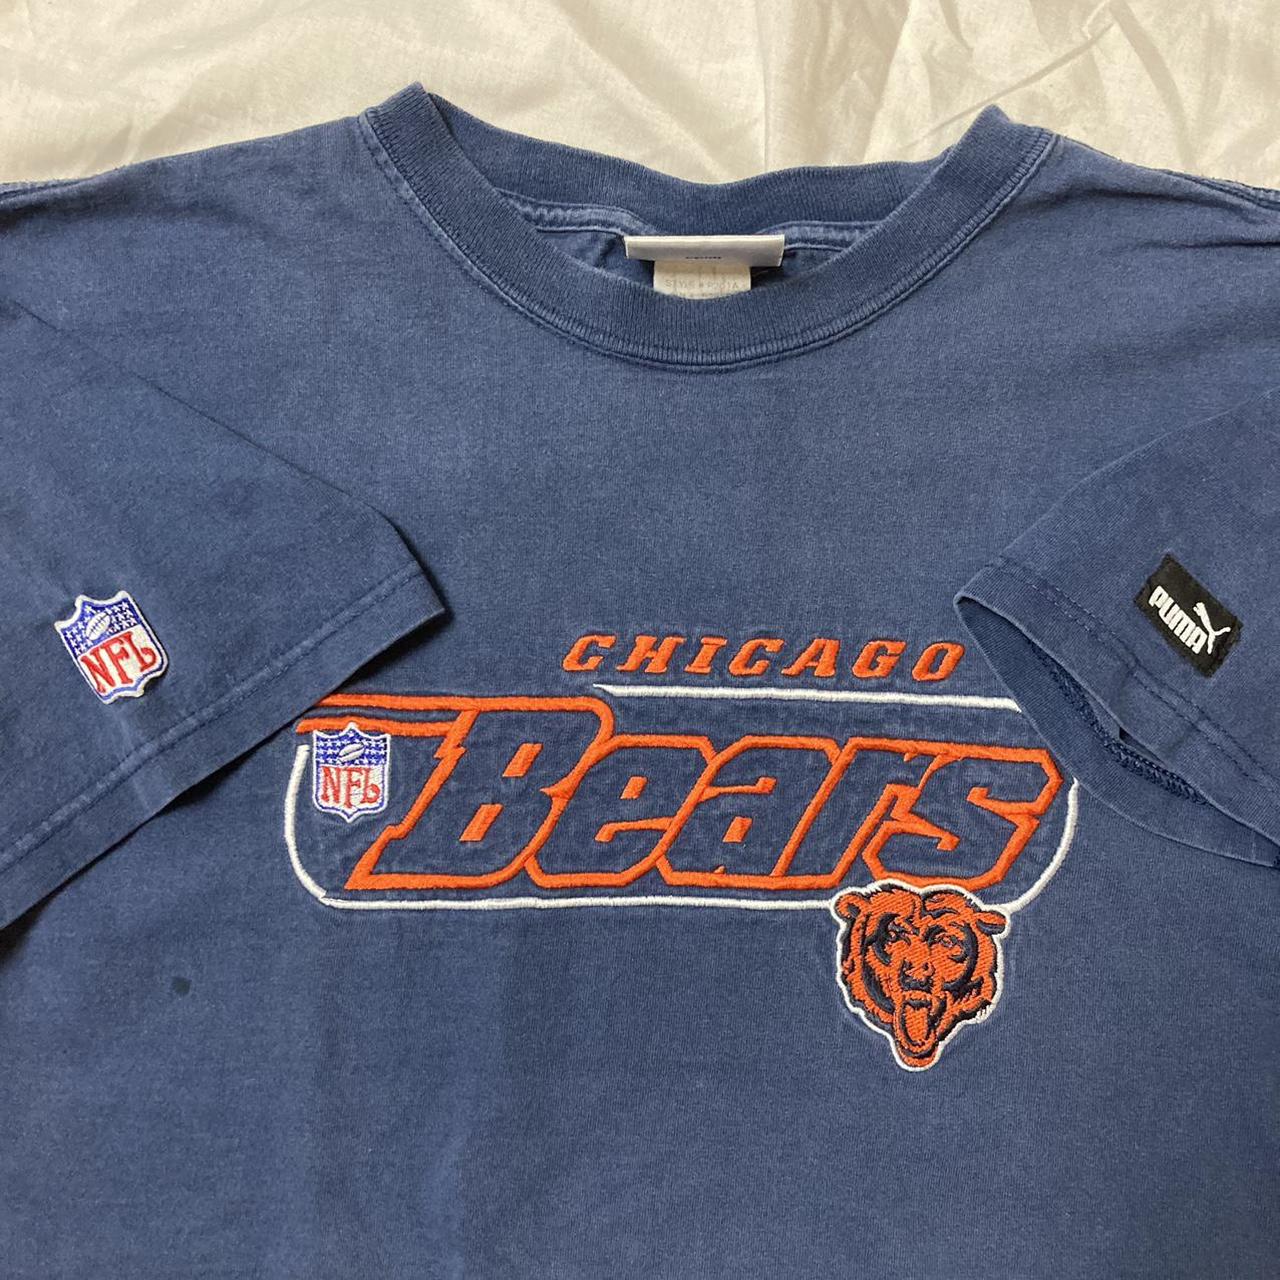 Vintage Chicago bears Tshirt! Navy blue tee with... - Depop